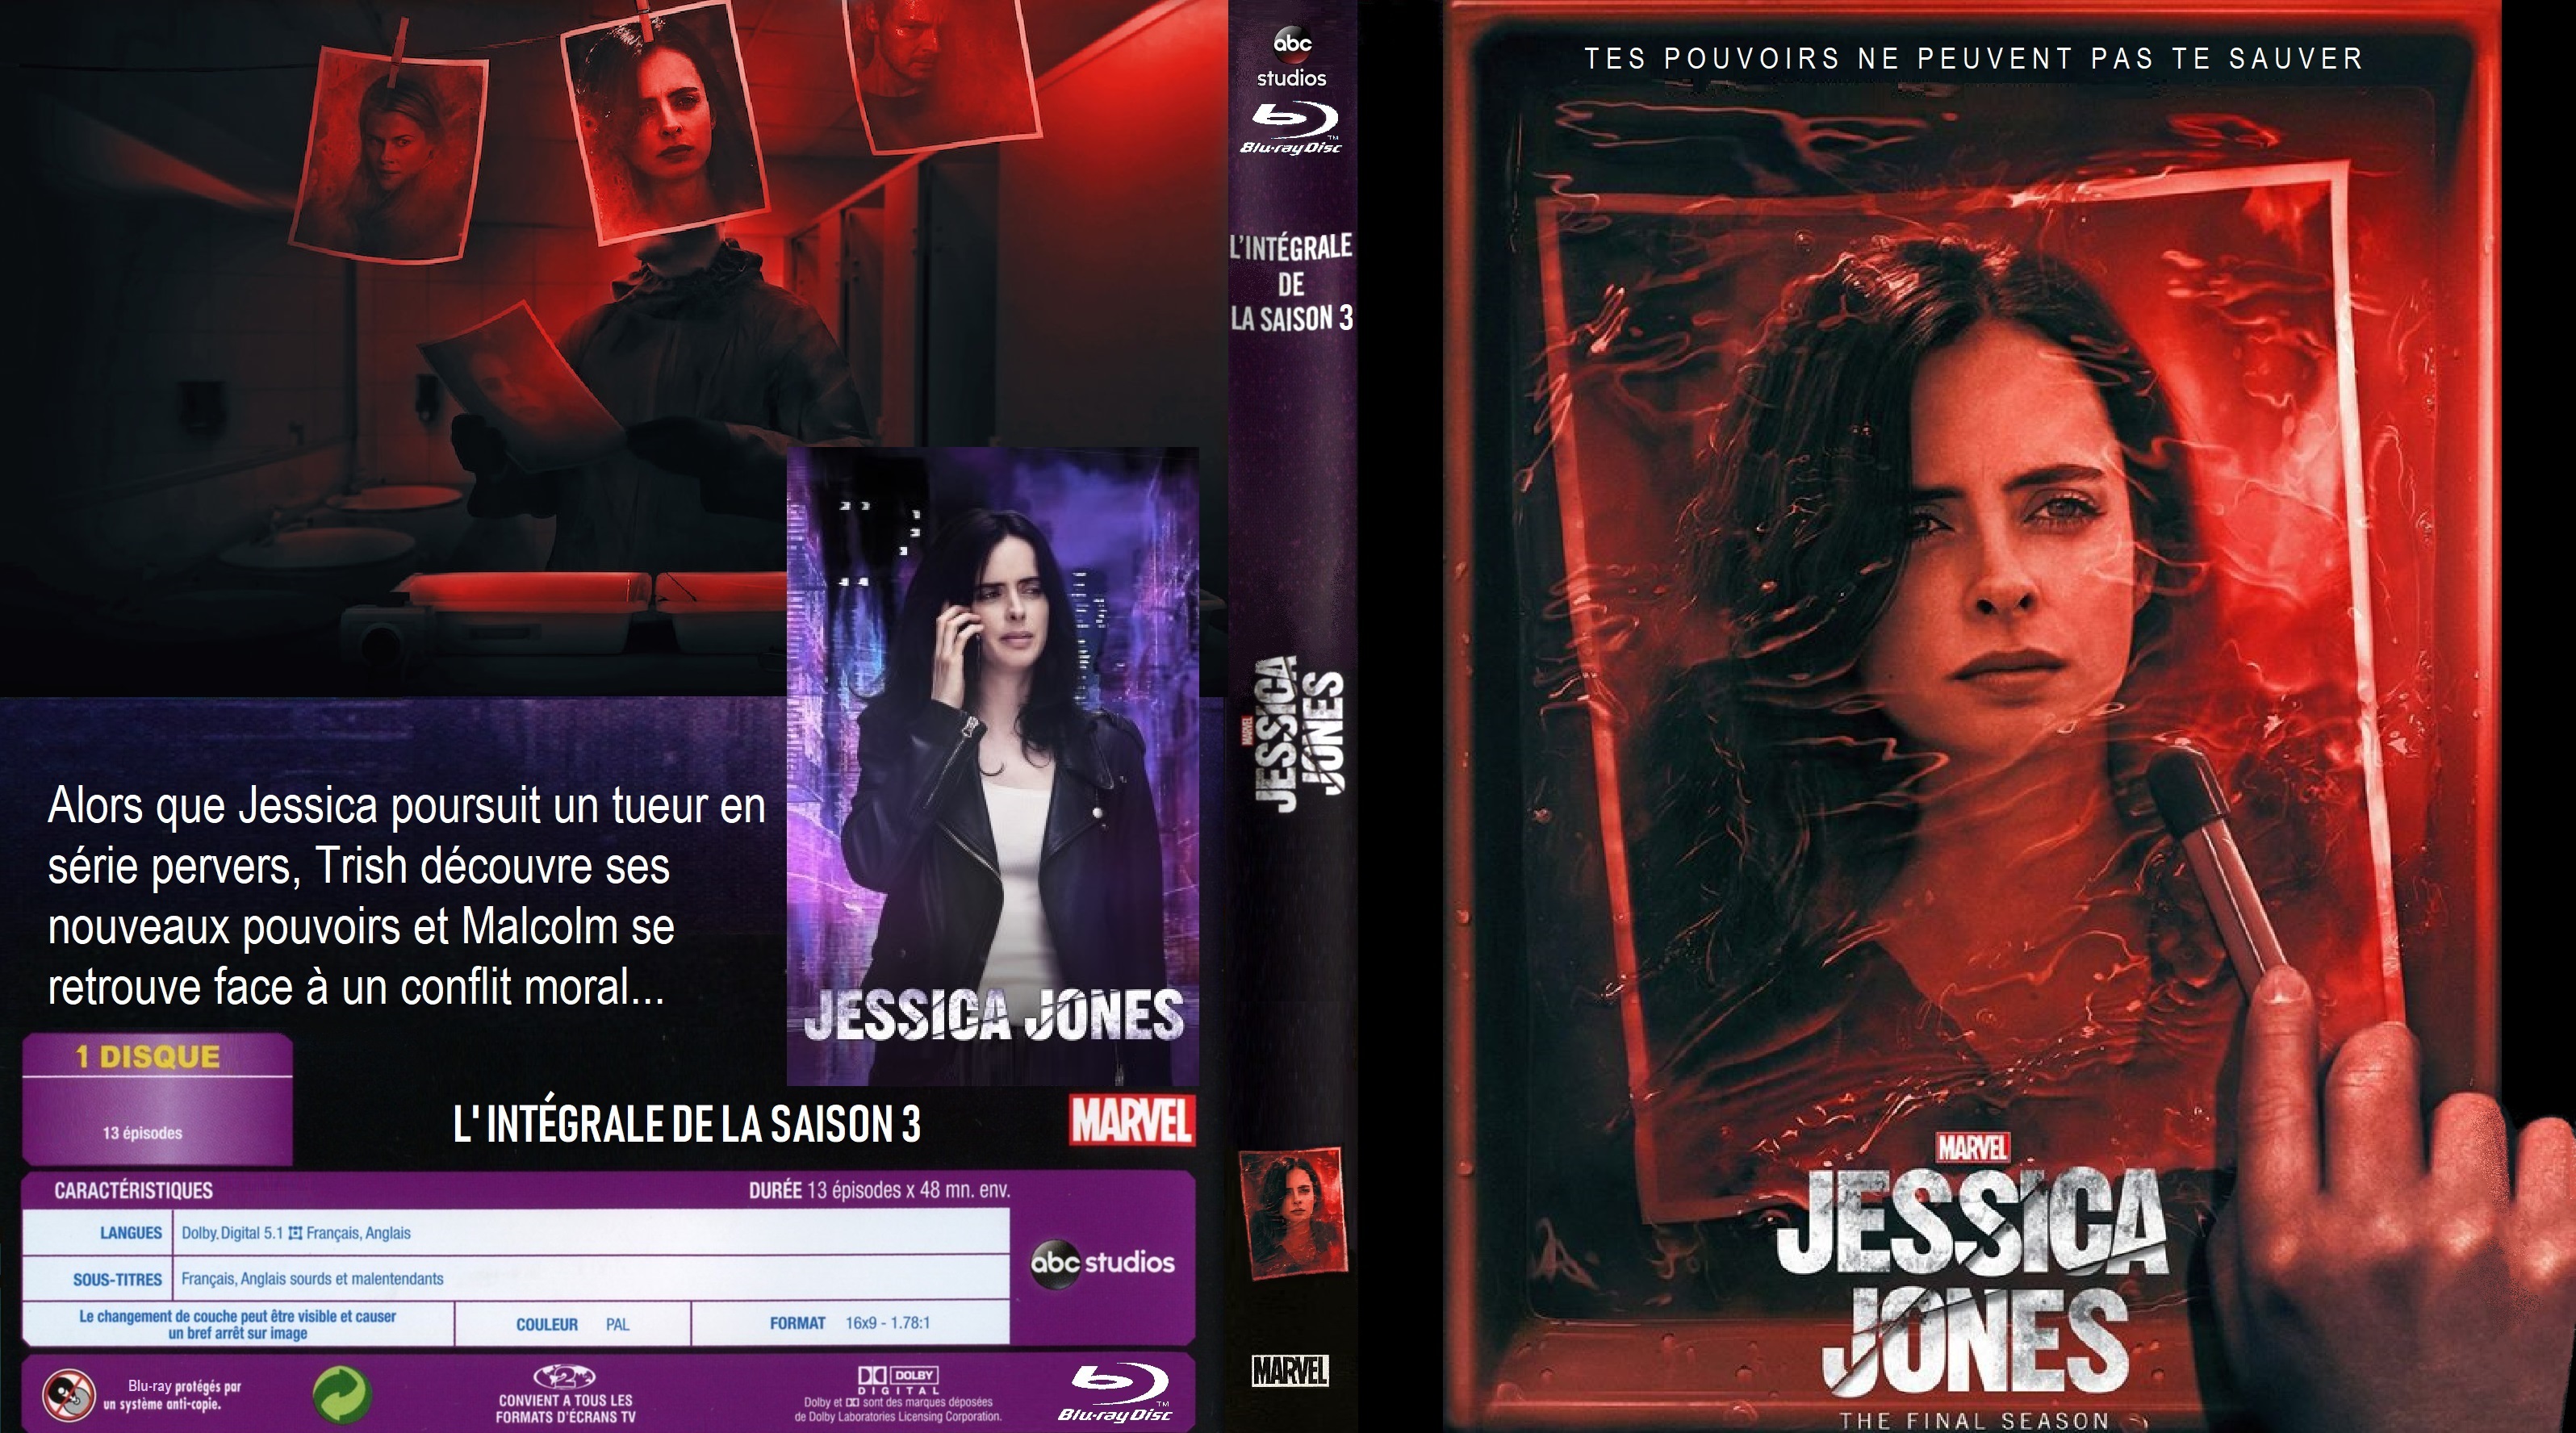 Jaquette DVD Jessica Jones saison 3 custom (BLU-RAY)